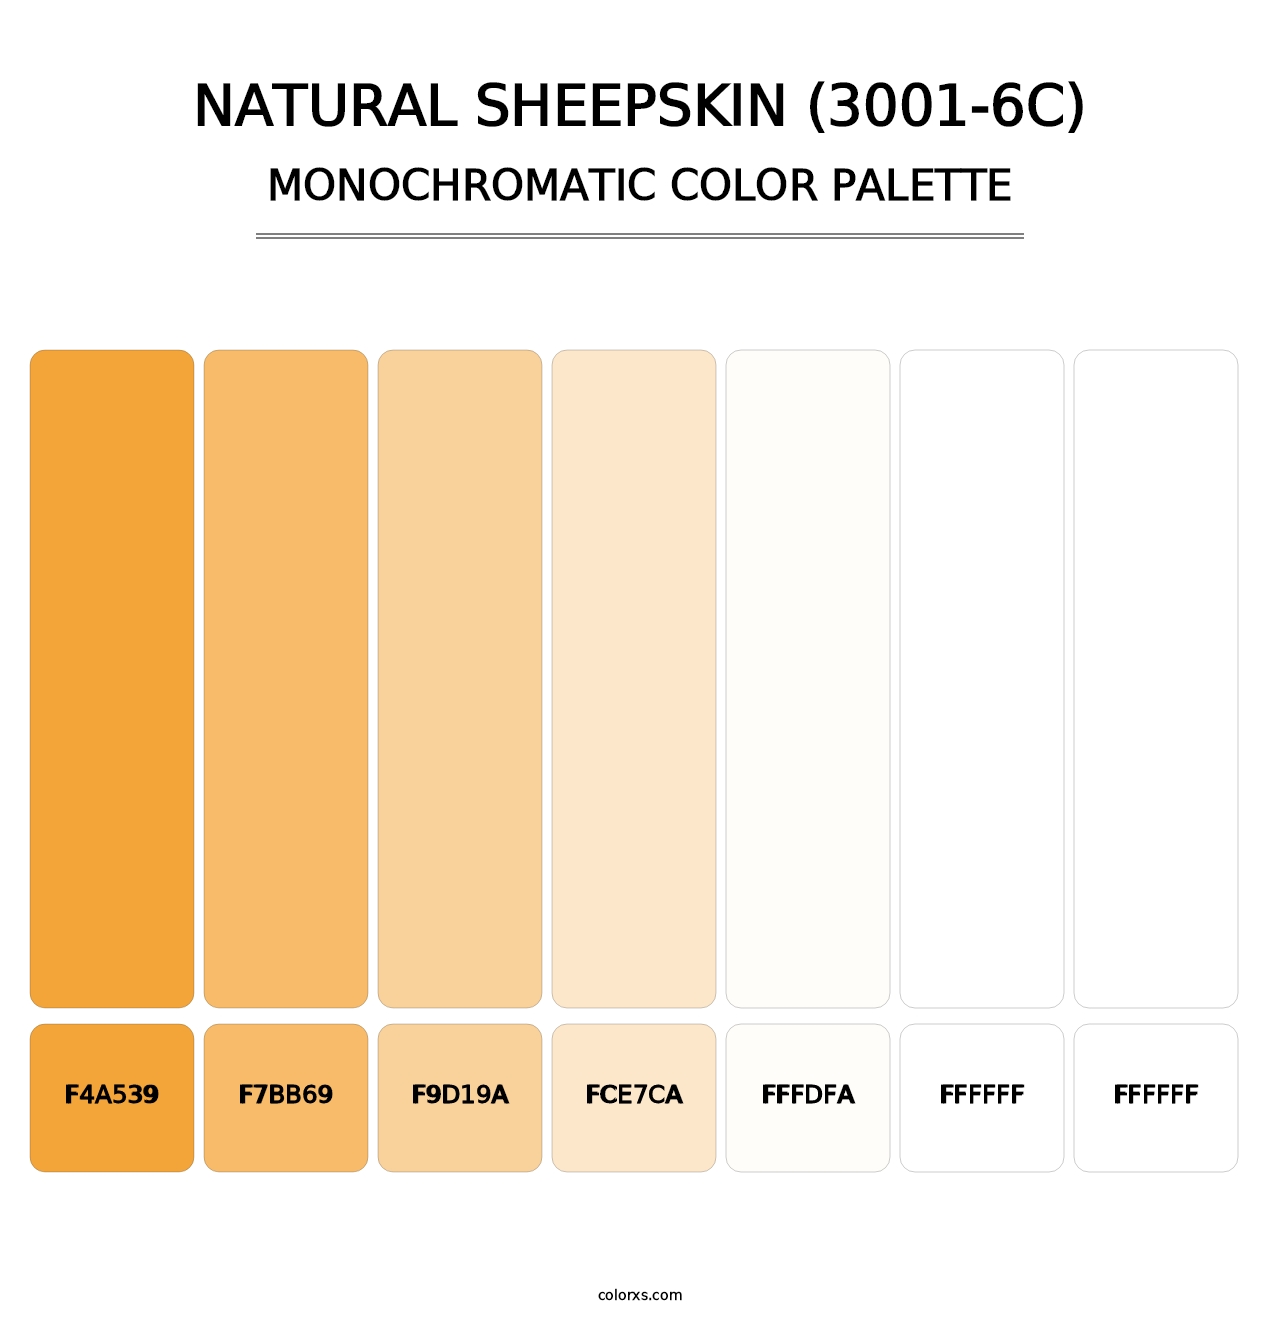 Natural Sheepskin (3001-6C) - Monochromatic Color Palette